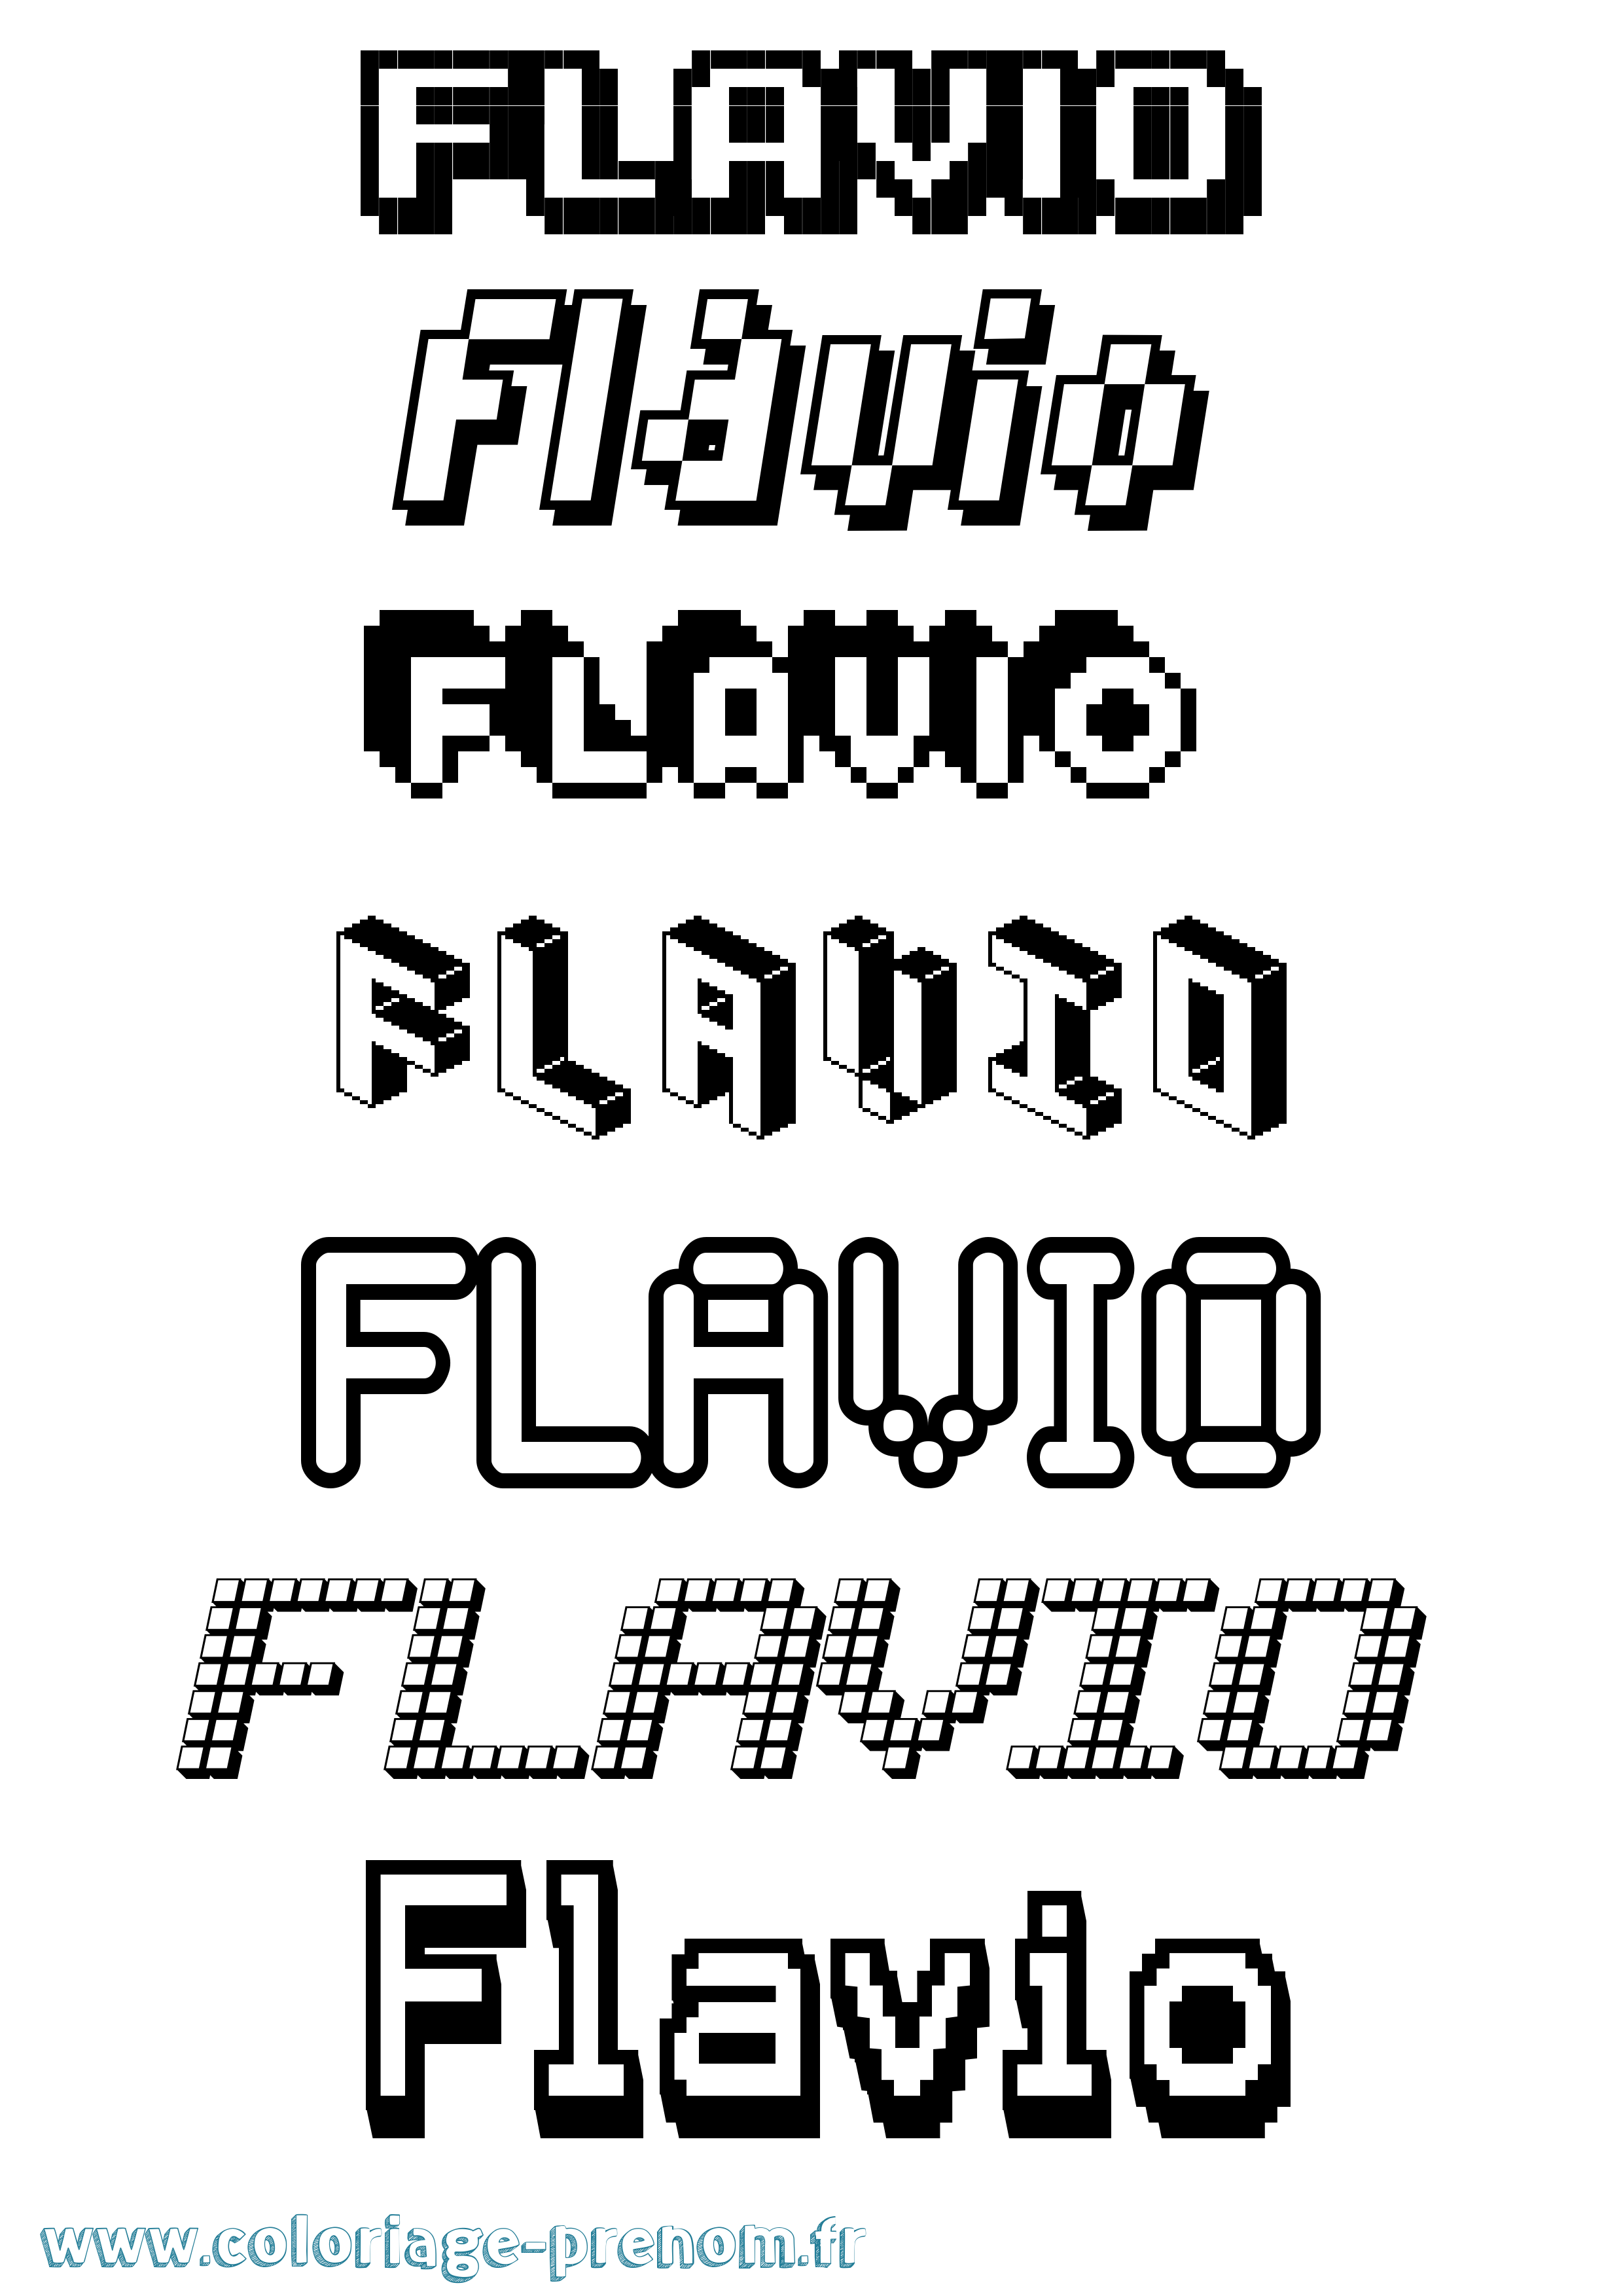 Coloriage prénom Flavio